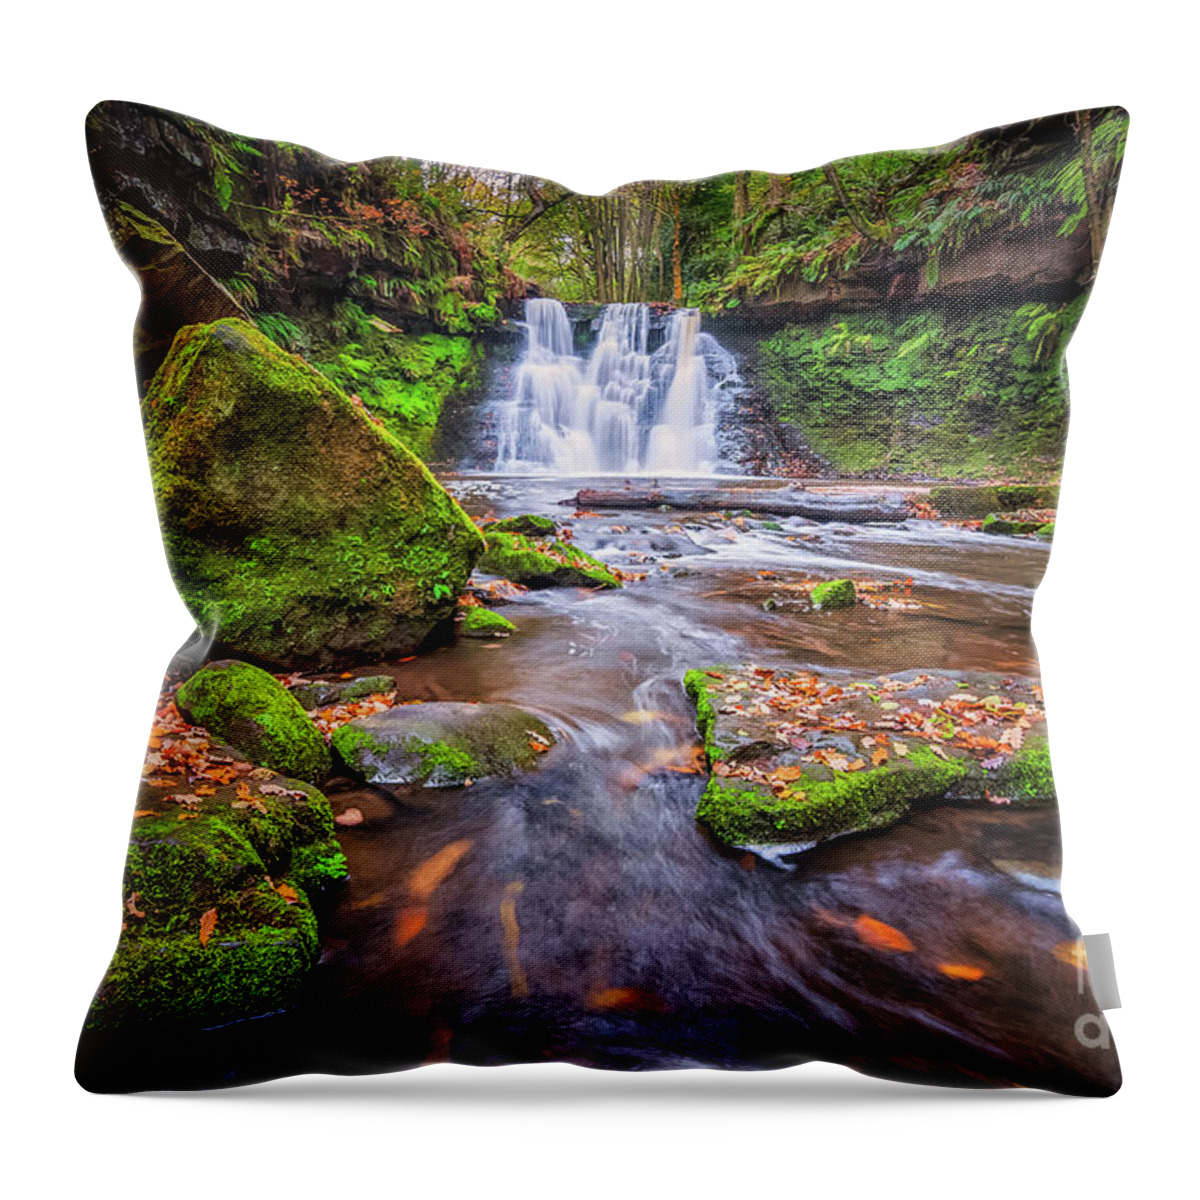 Waterfall Throw Pillow featuring the photograph Goit Stock Waterfall #11 by Mariusz Talarek